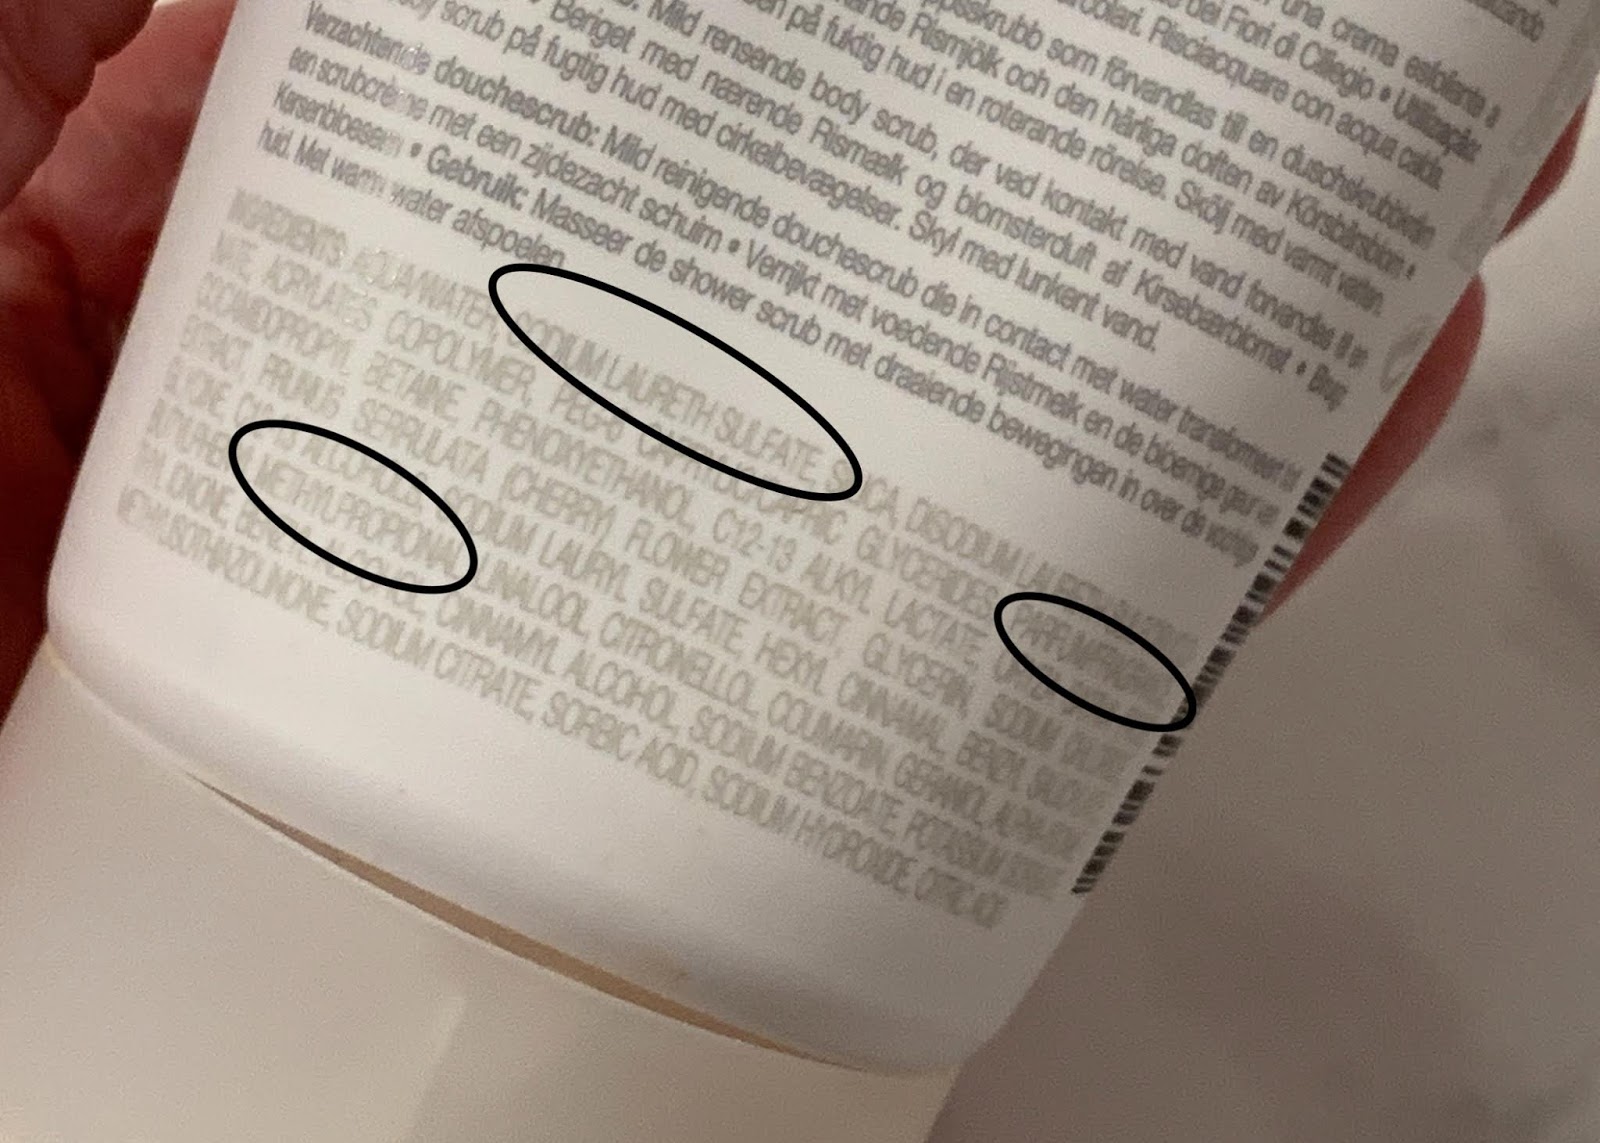 skincare bottle showing toxic ingredients